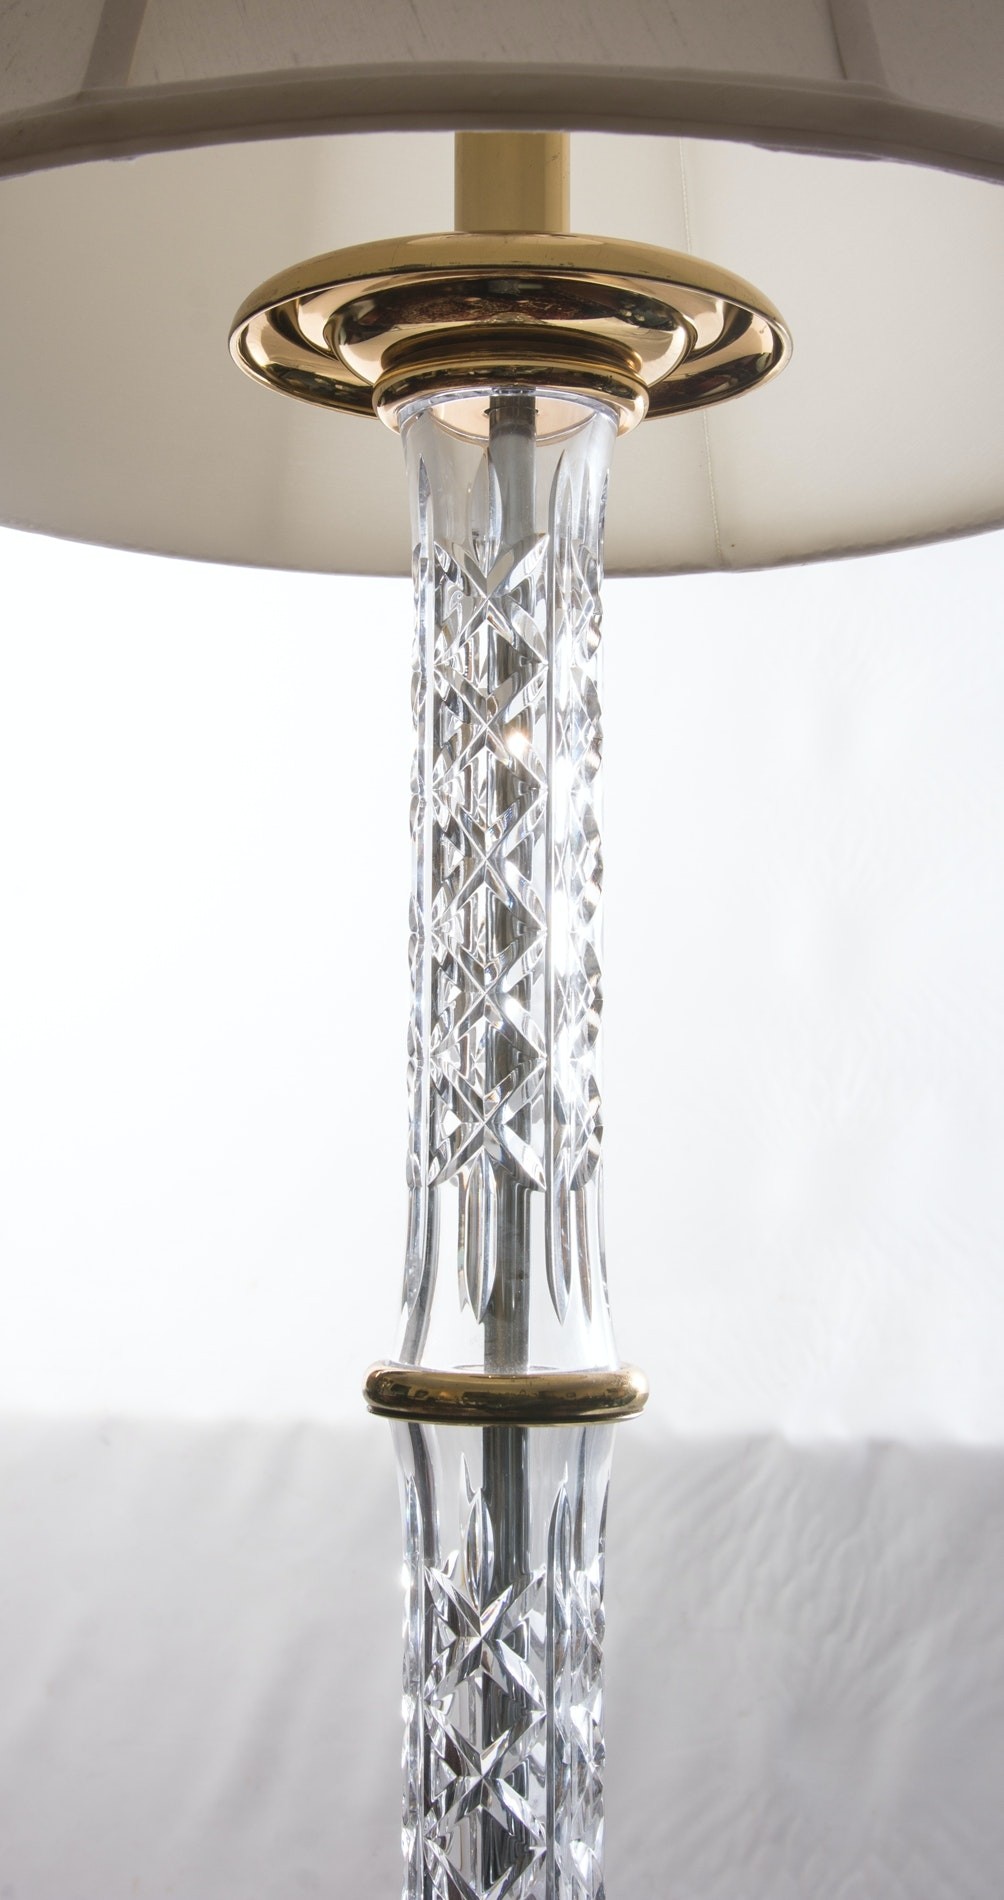 Waterford crystal kinsale floor lamp ebth